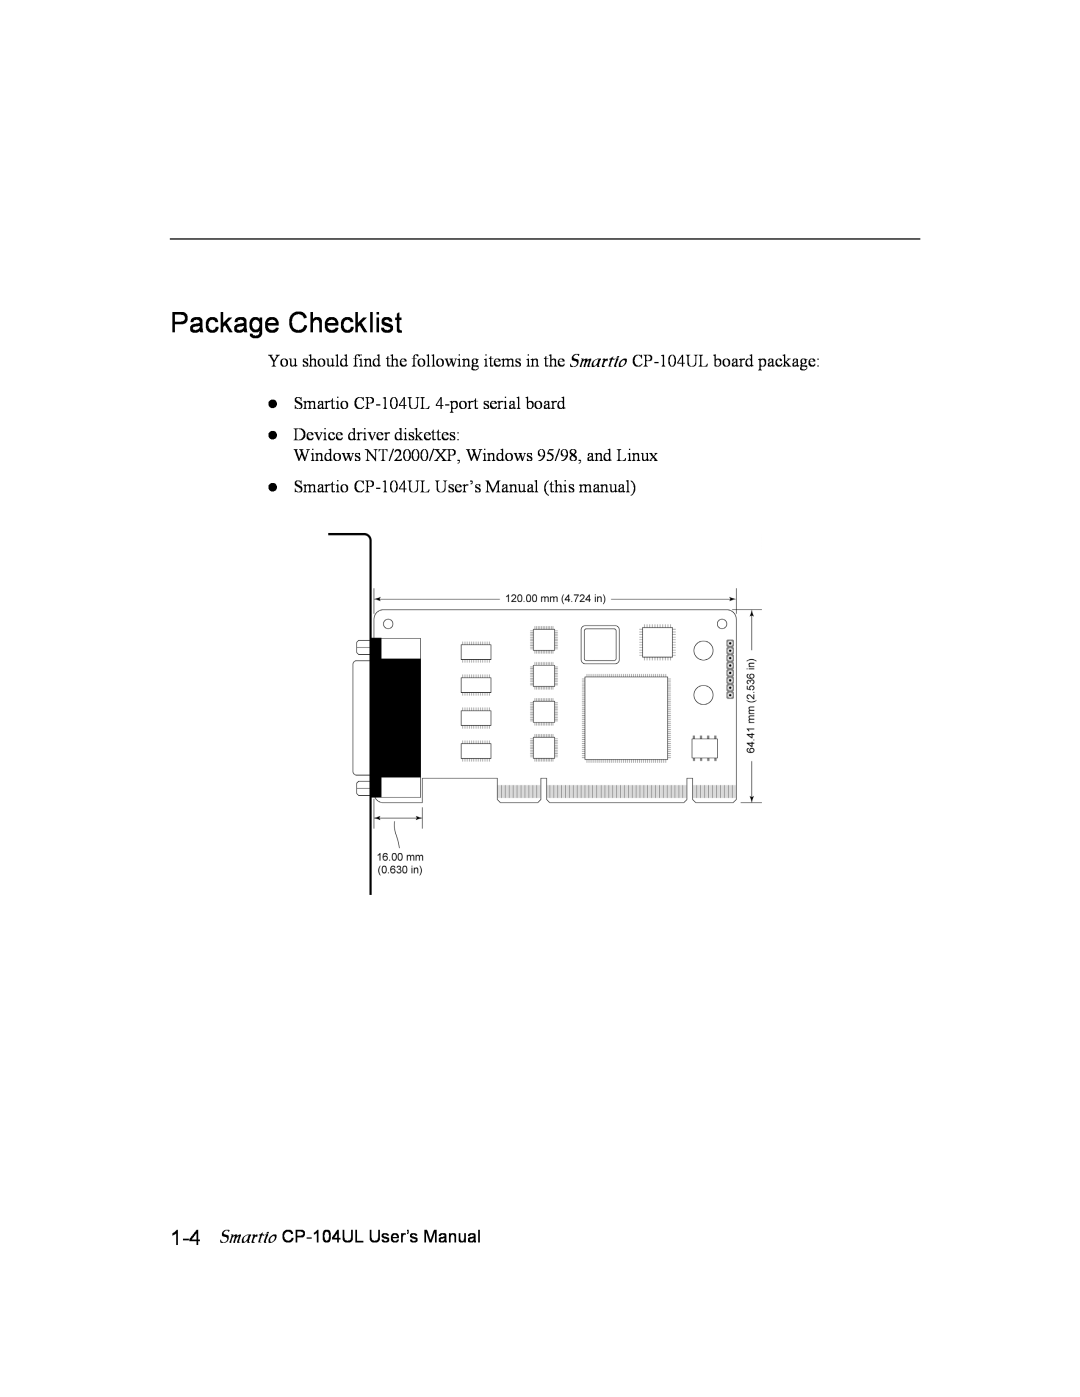 Moxa Technologies user manual Package Checklist, Smartio CP-104UL User’s Manual 